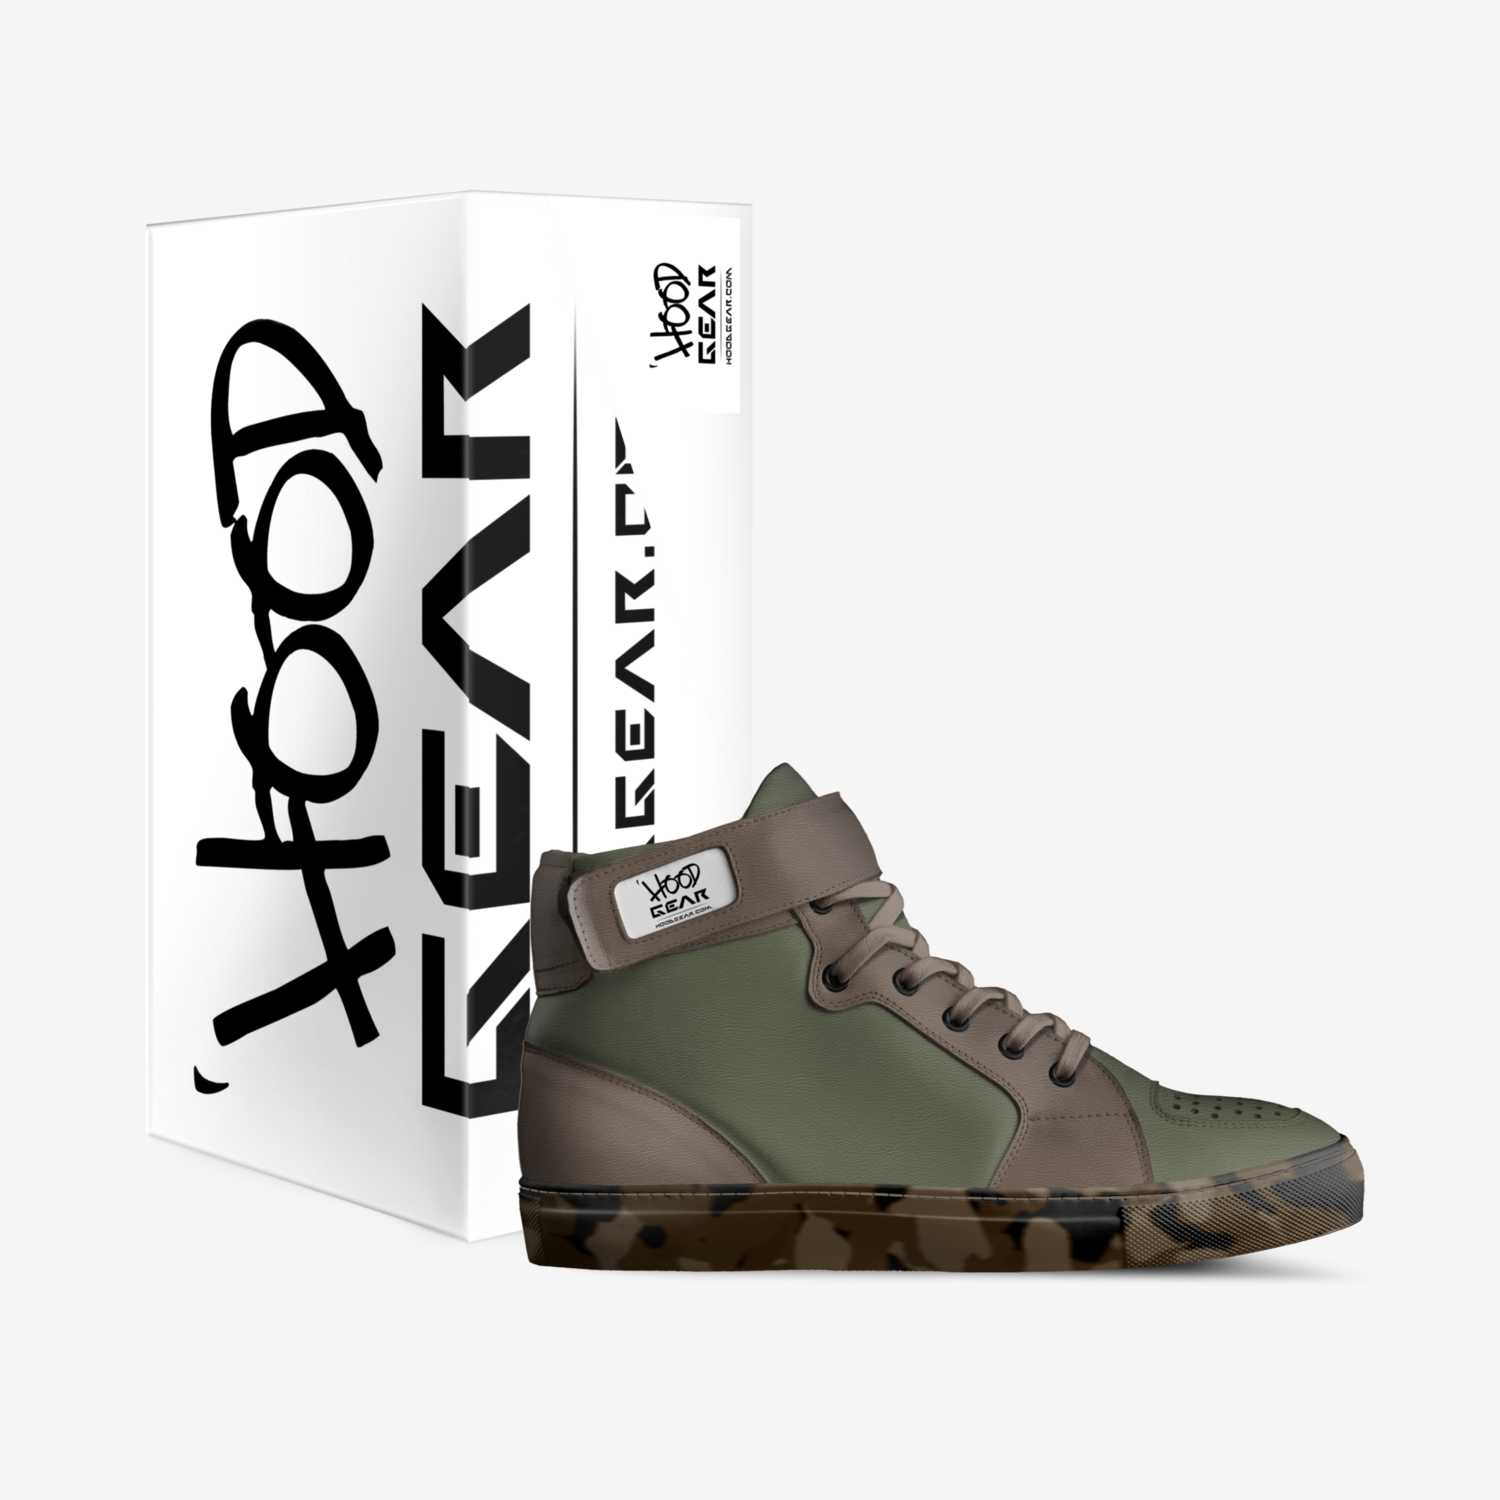 HOODGEAR2 custom made in Italy shoes by Ezeoma Obioha | Box view